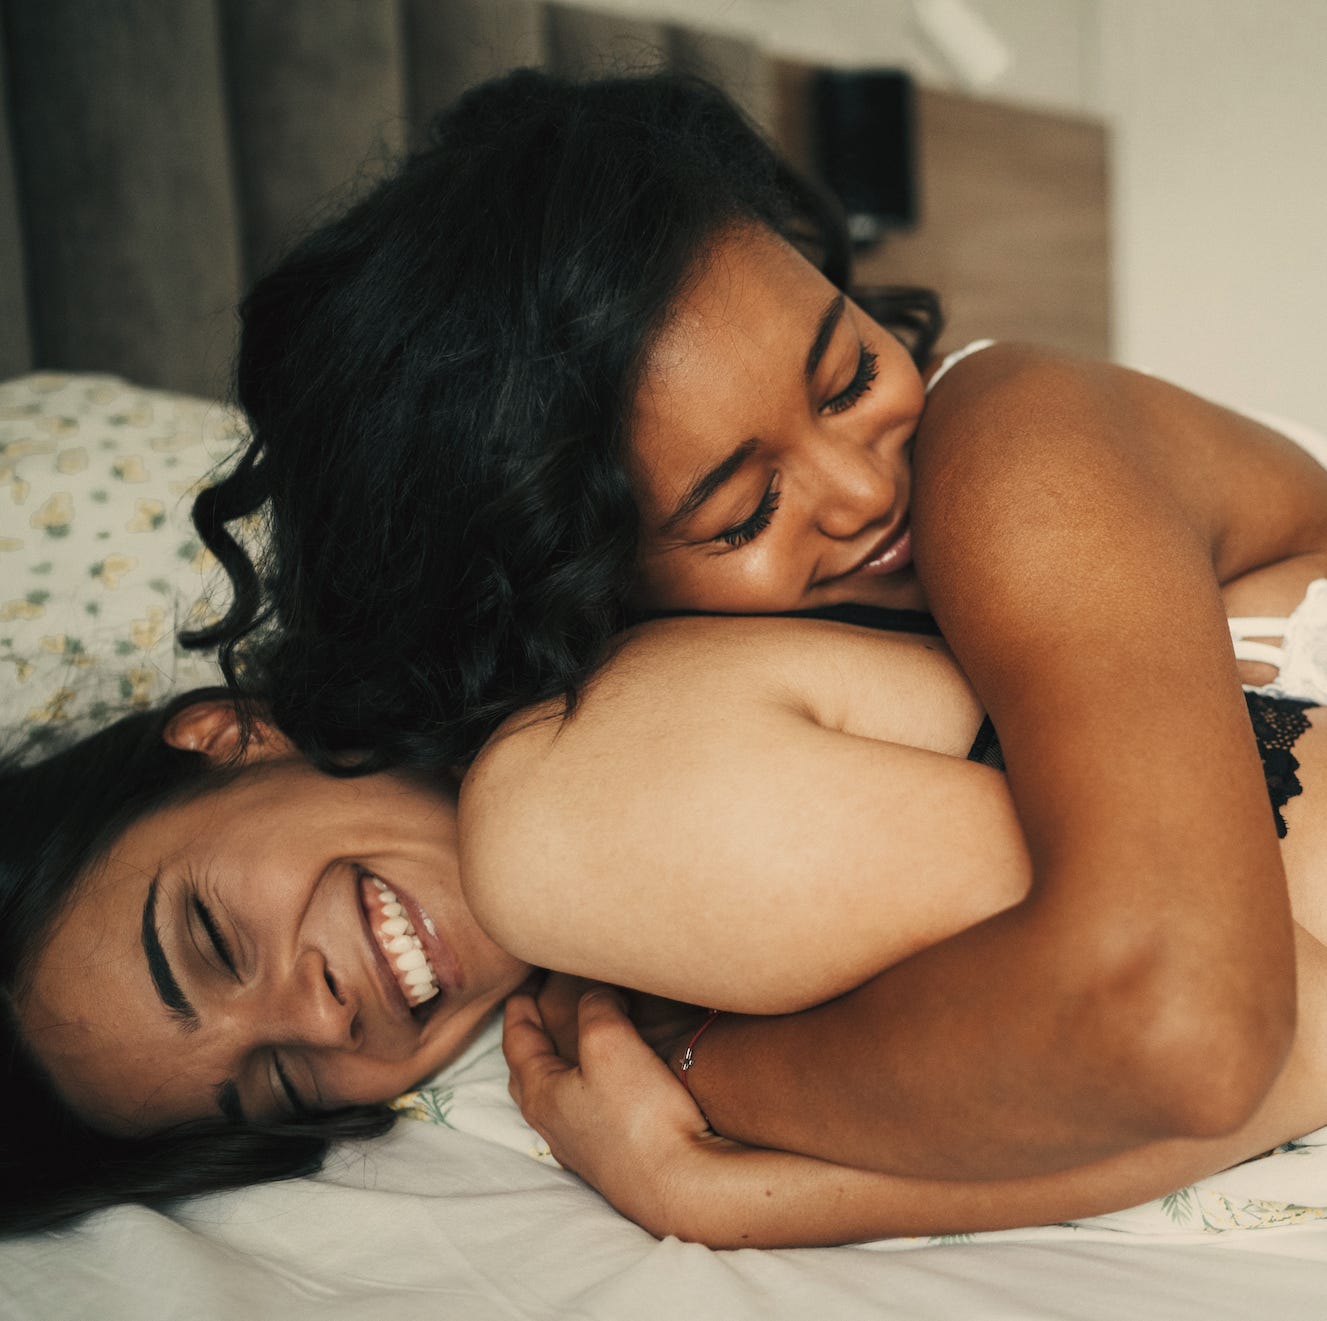 daniel bussieres share hot lesbians doing it photos